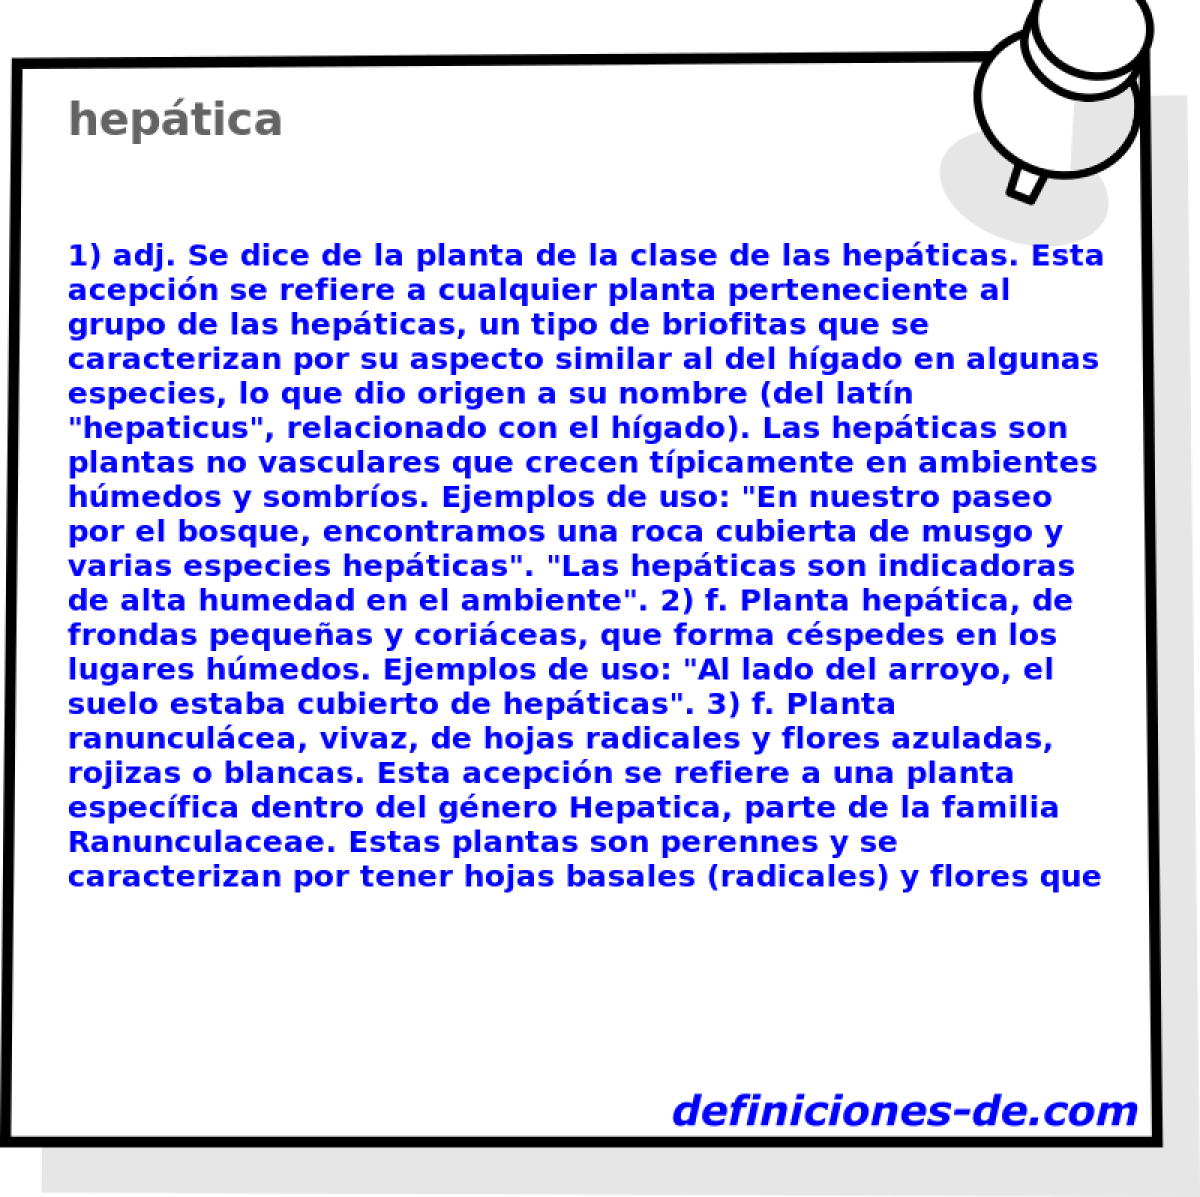 heptica 